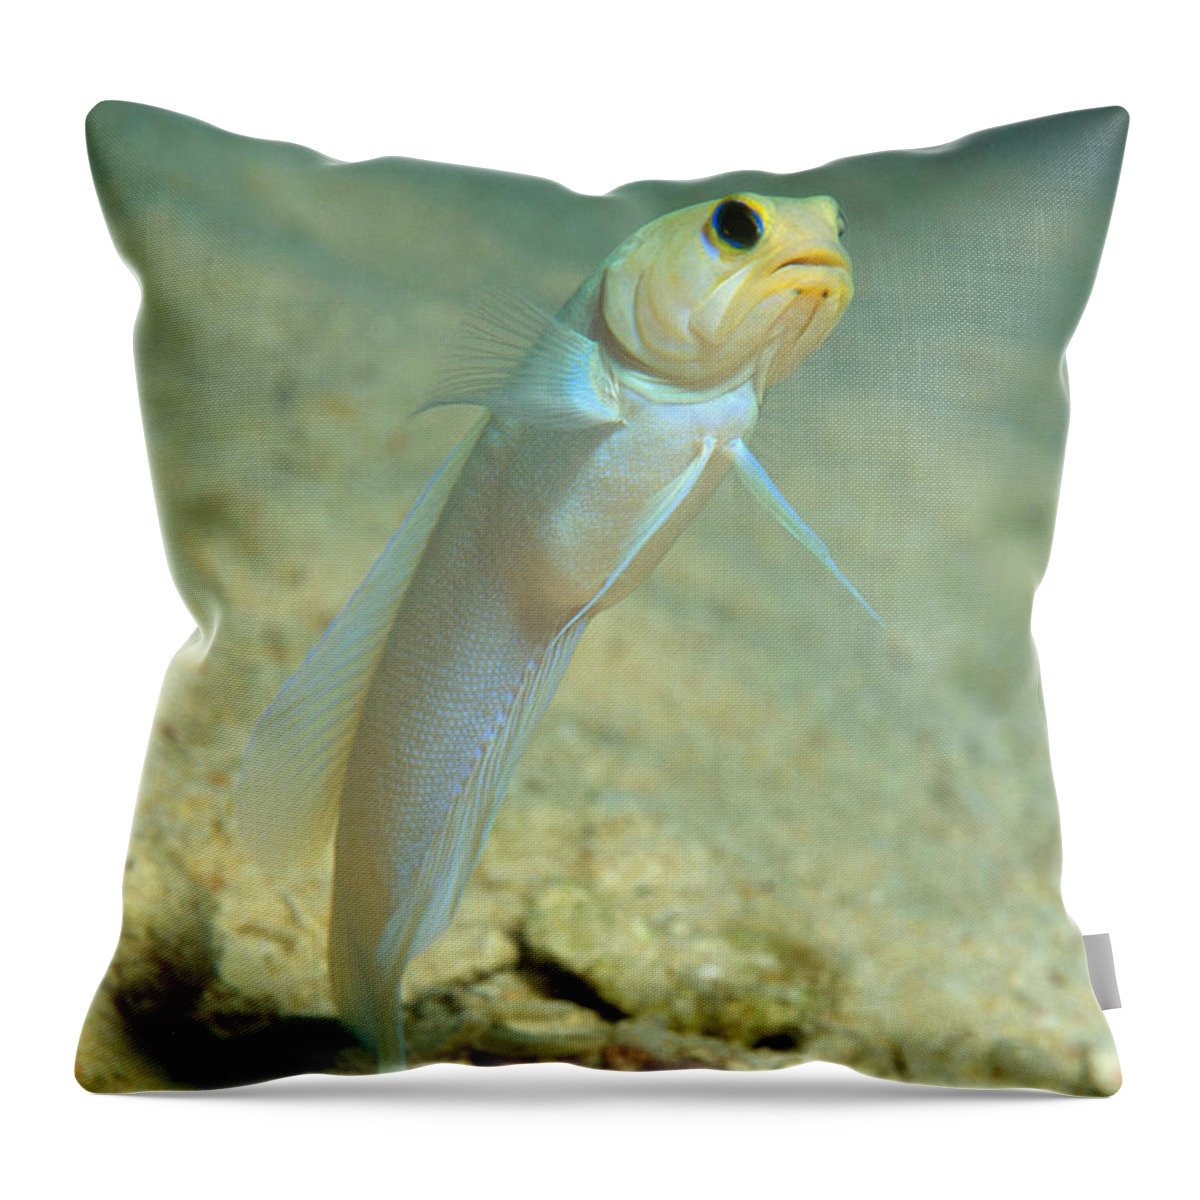 Yellowhead Jawfish Throw Pillow featuring the photograph Yellowhead Jawfish by Andrew J. Martinez